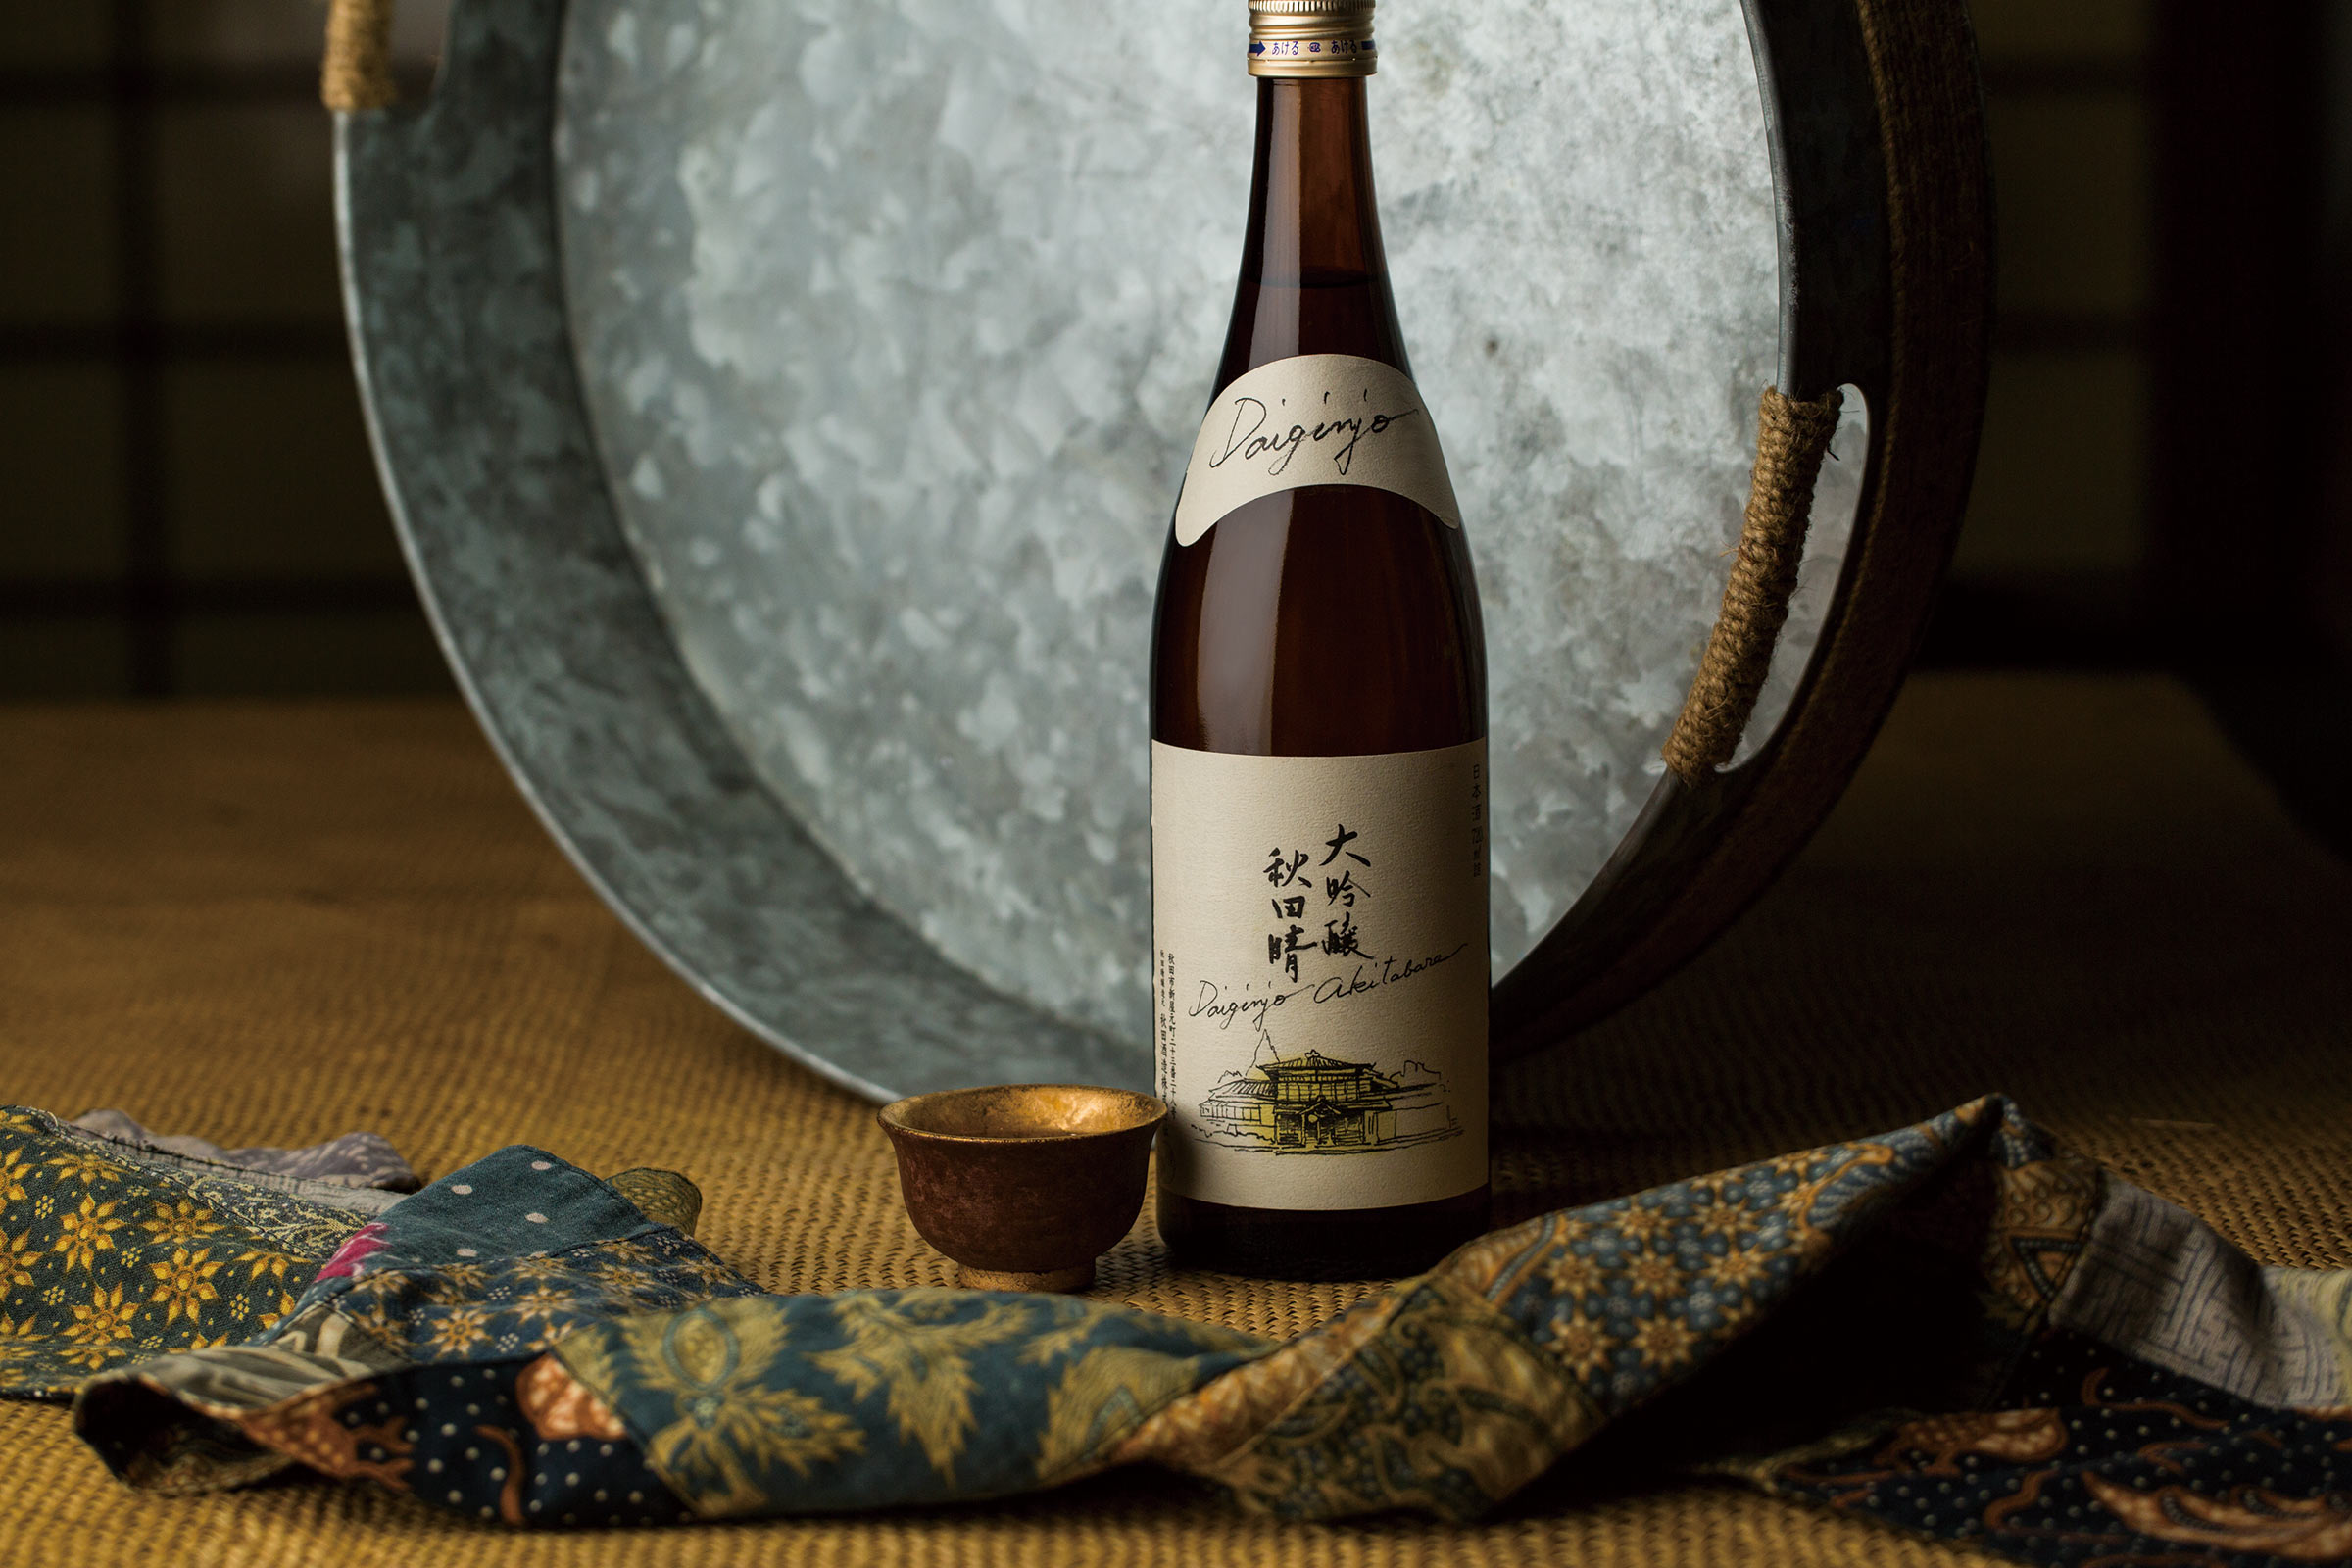 Akitabare “Daiginjo” bottle